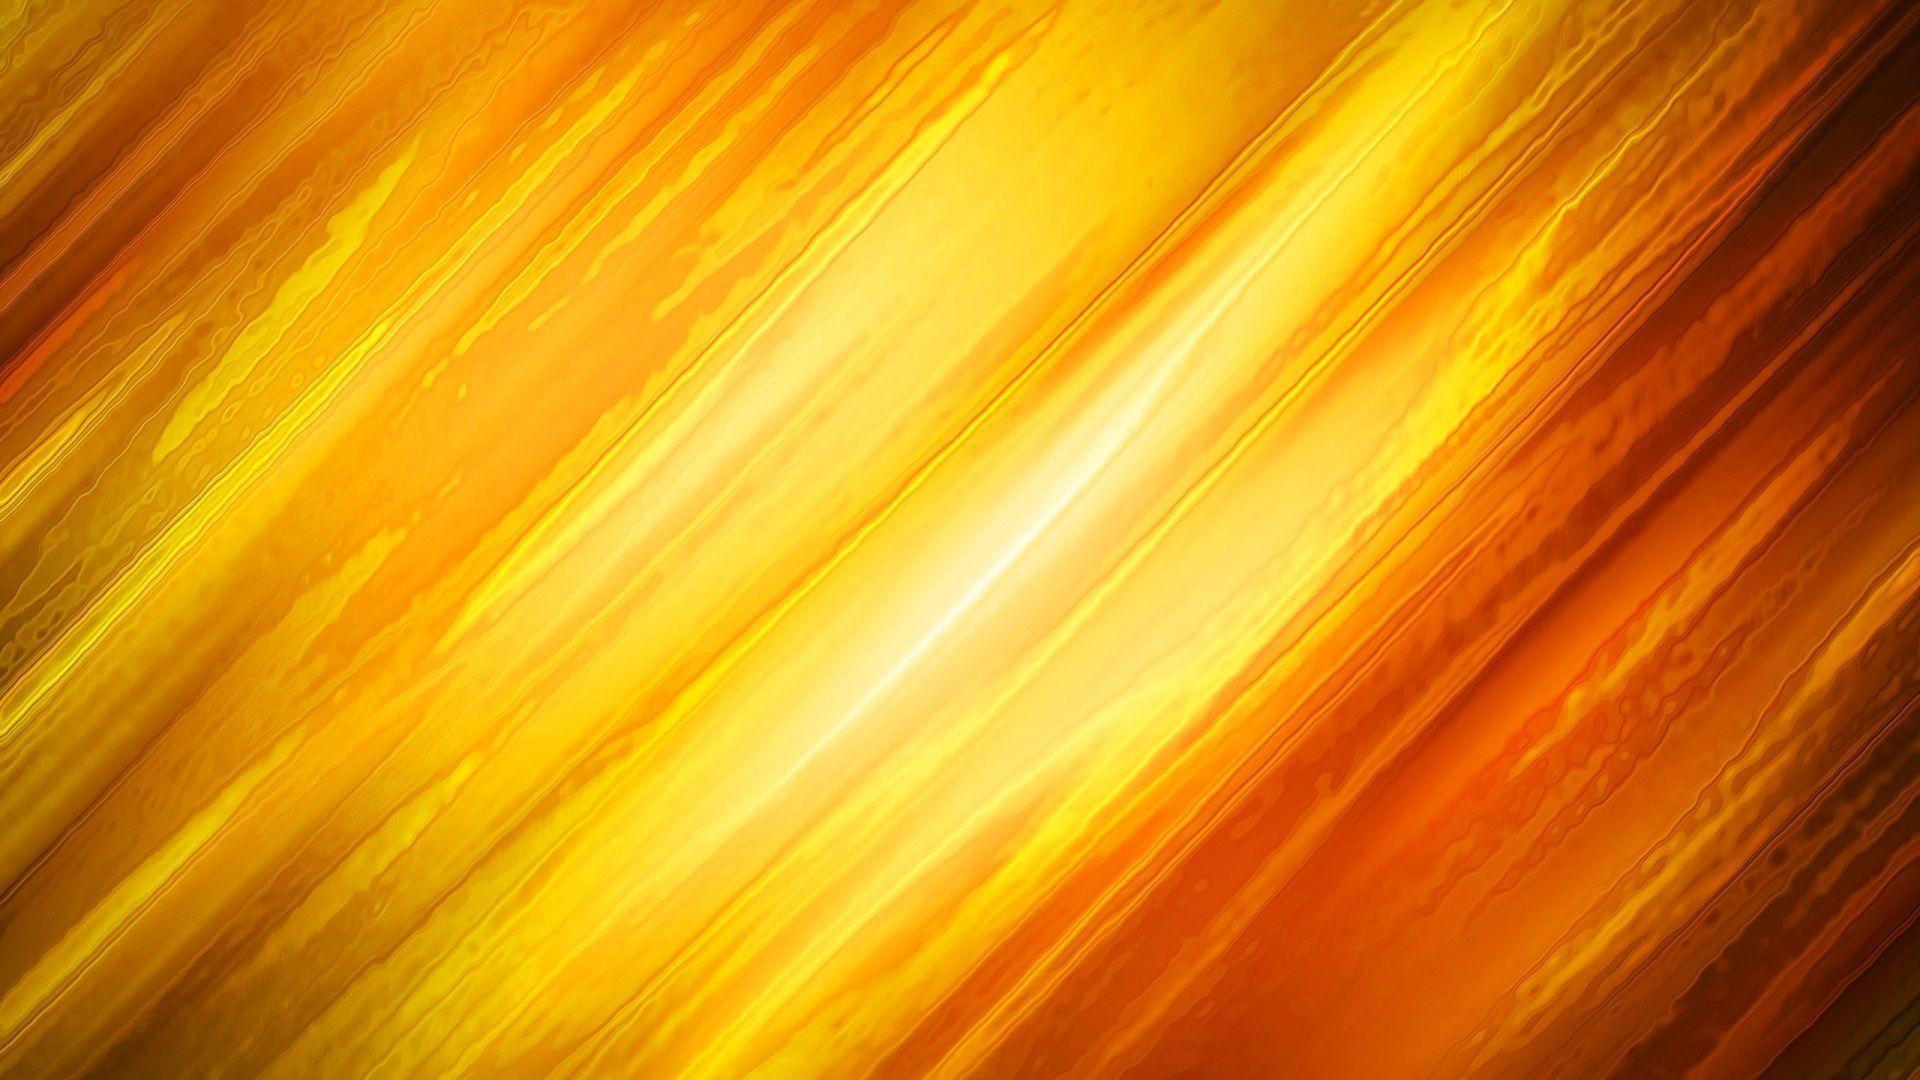 Wallpaper For > Background Image Yellow Orange